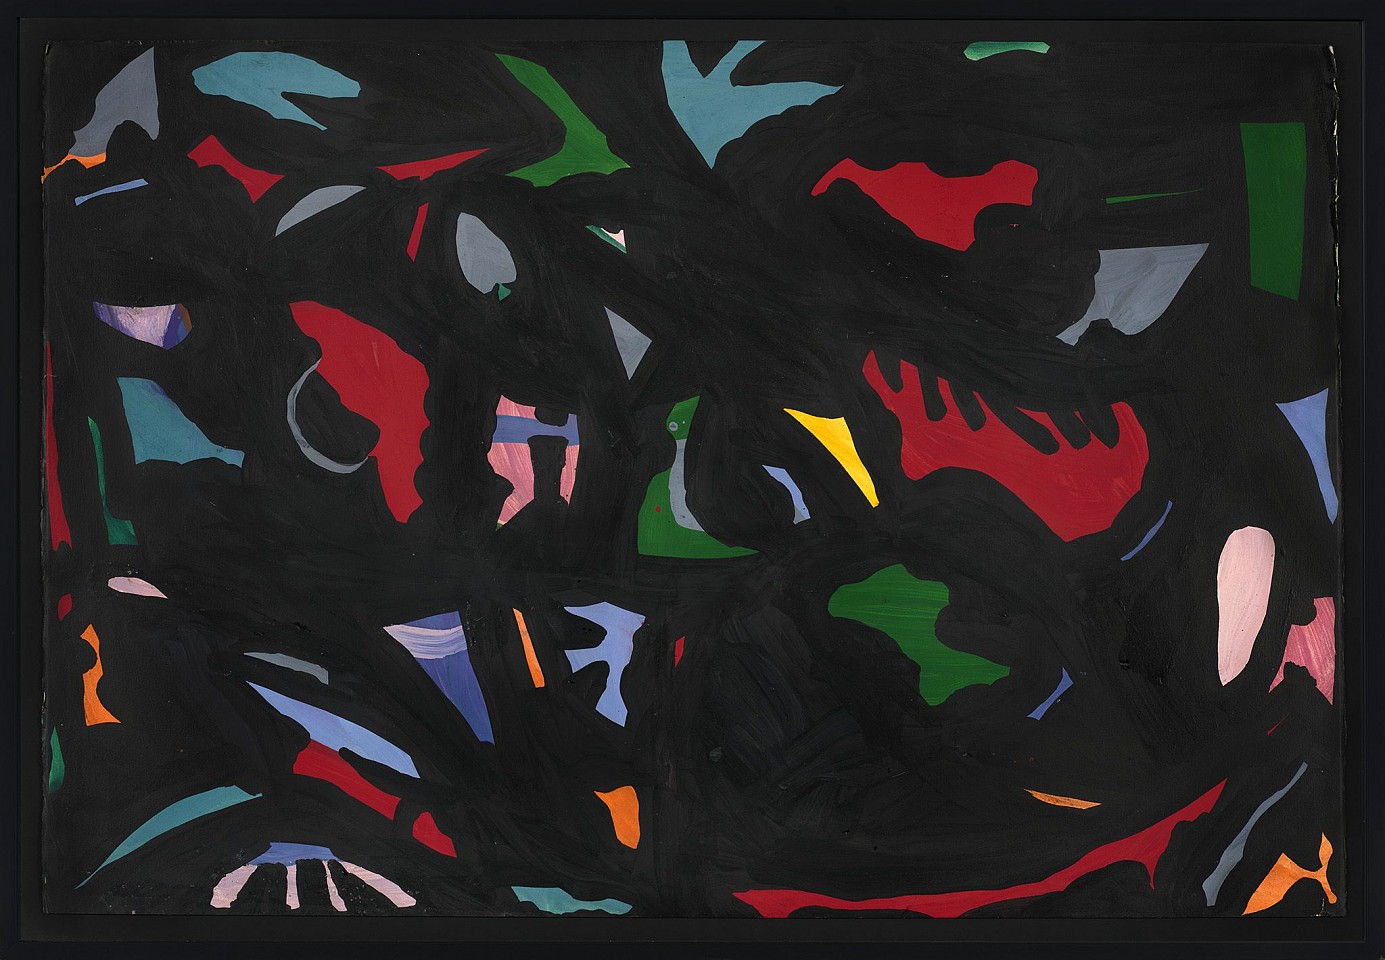 Rochelle Caper, Untitled, c. 1980 -1990
Oil on paper, 29 3/4 x 44 in. (75.6 x 111.8 cm)
RCAP-00004